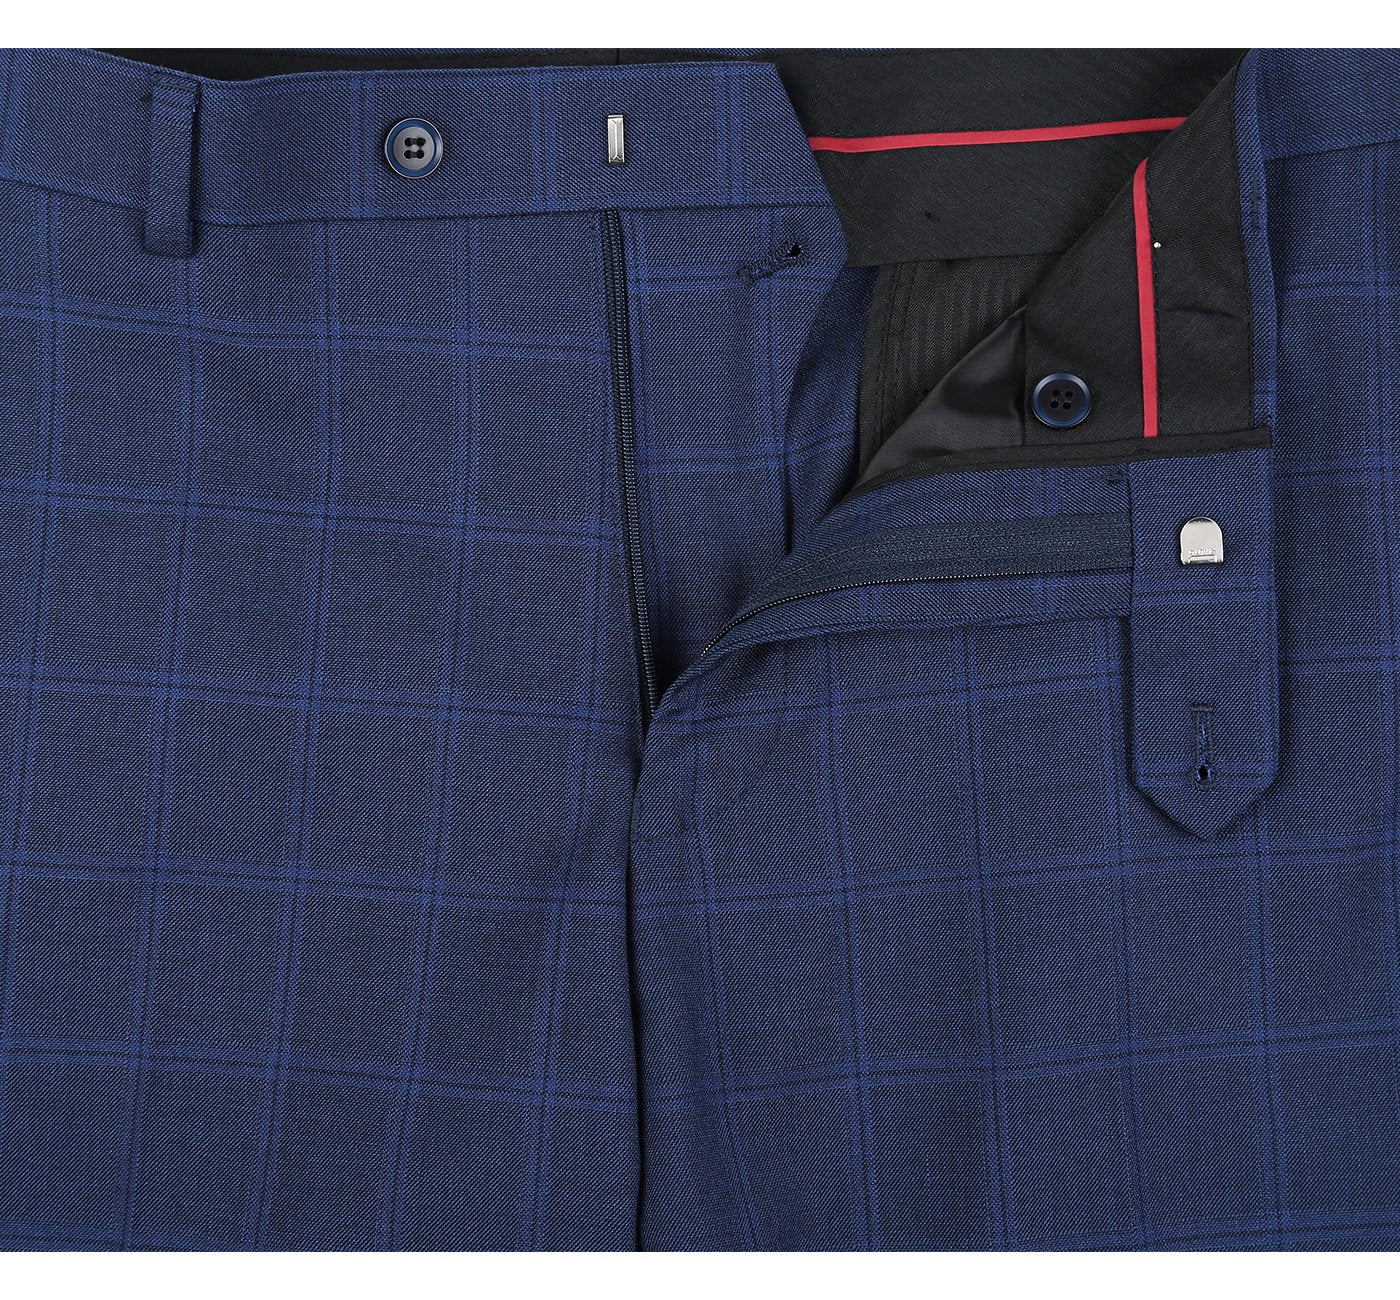 292-6 Men's Slim Fit 2-Piece Single Breasted Blue Windowpane Suit